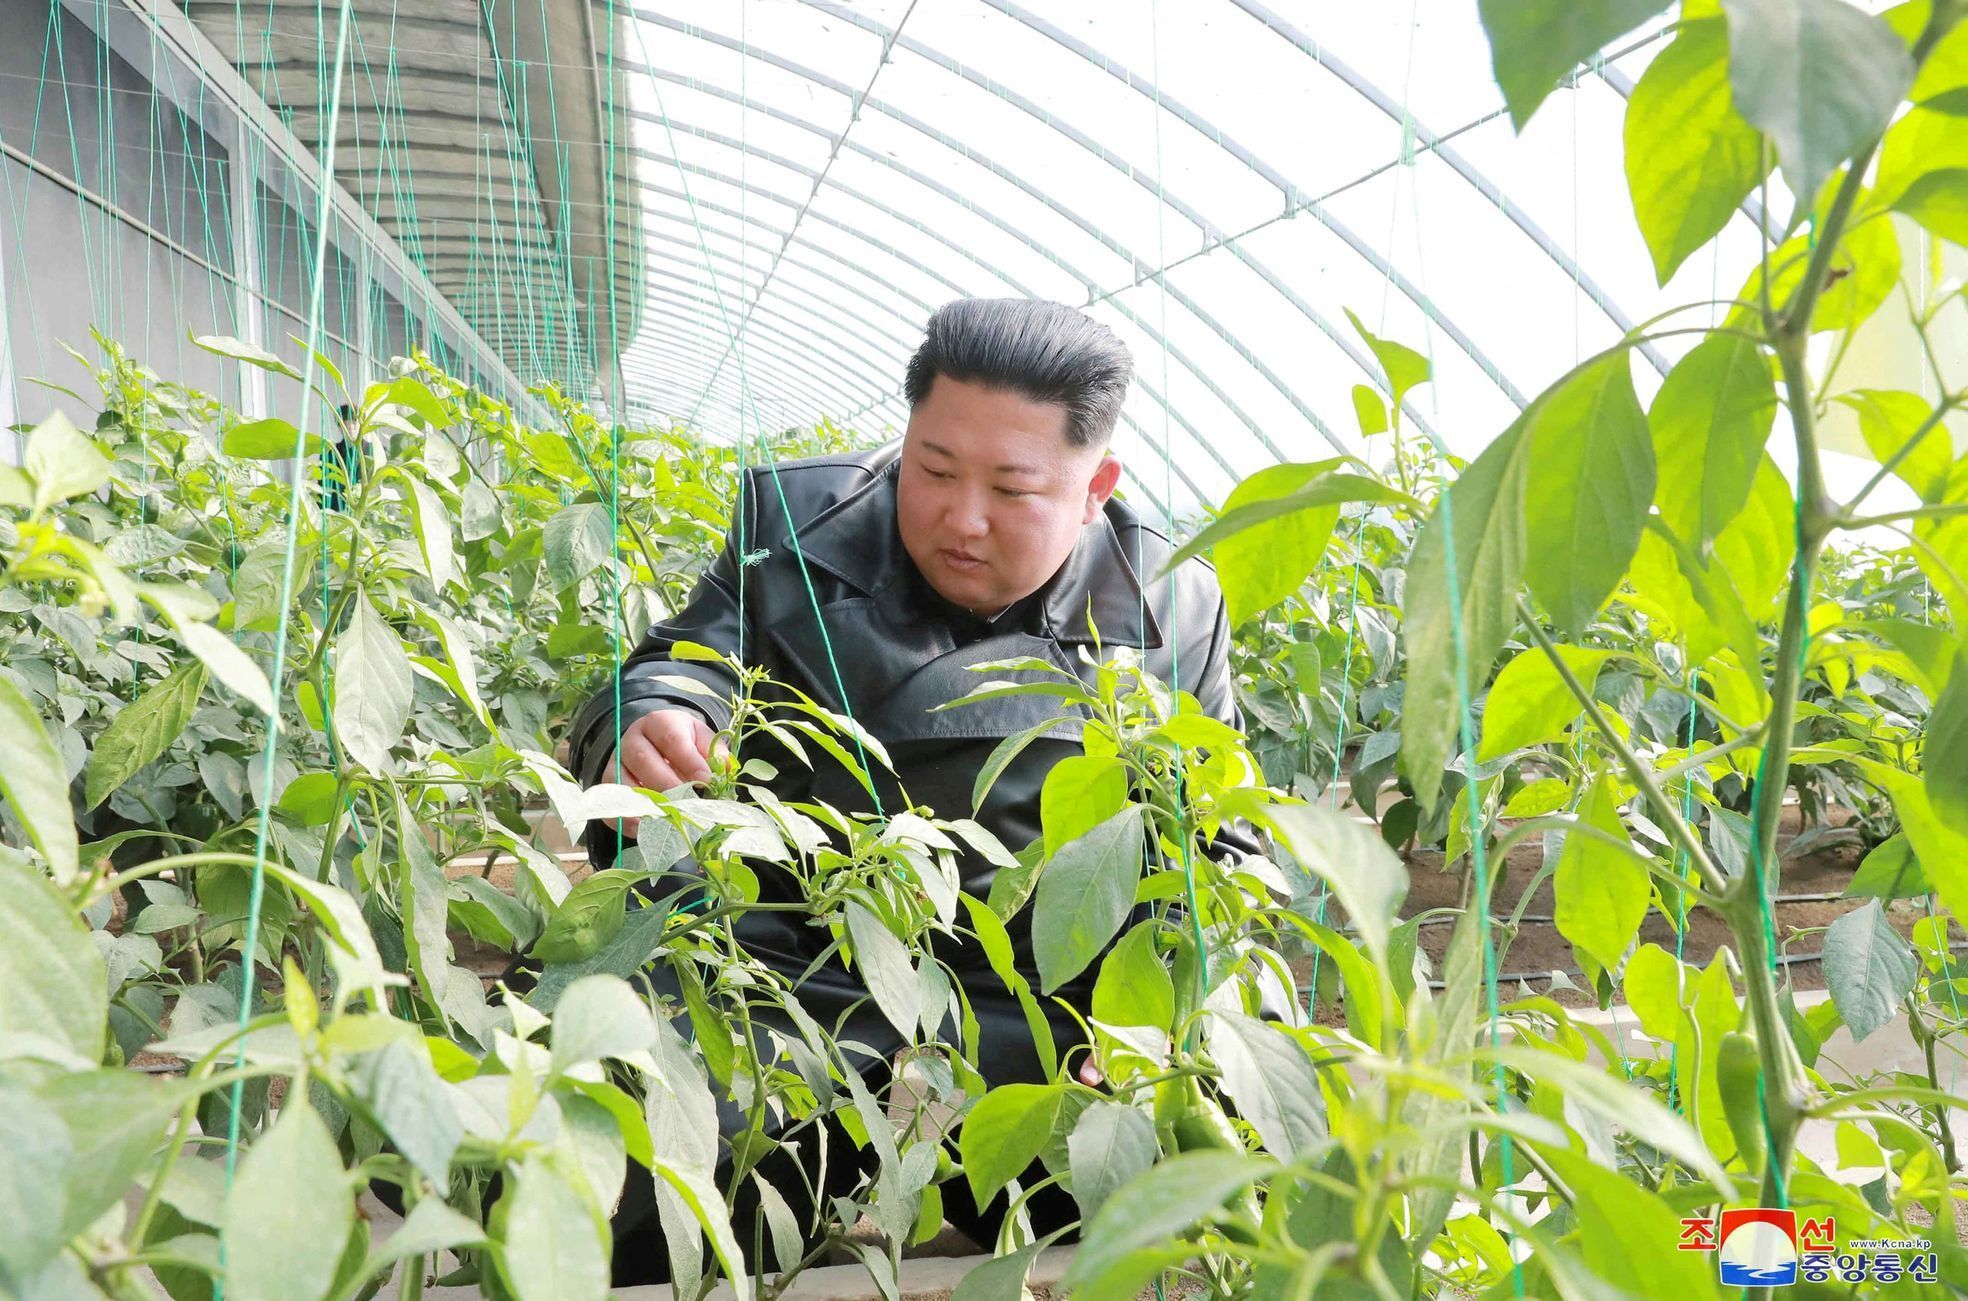 kldr kim čong-un farma skleník